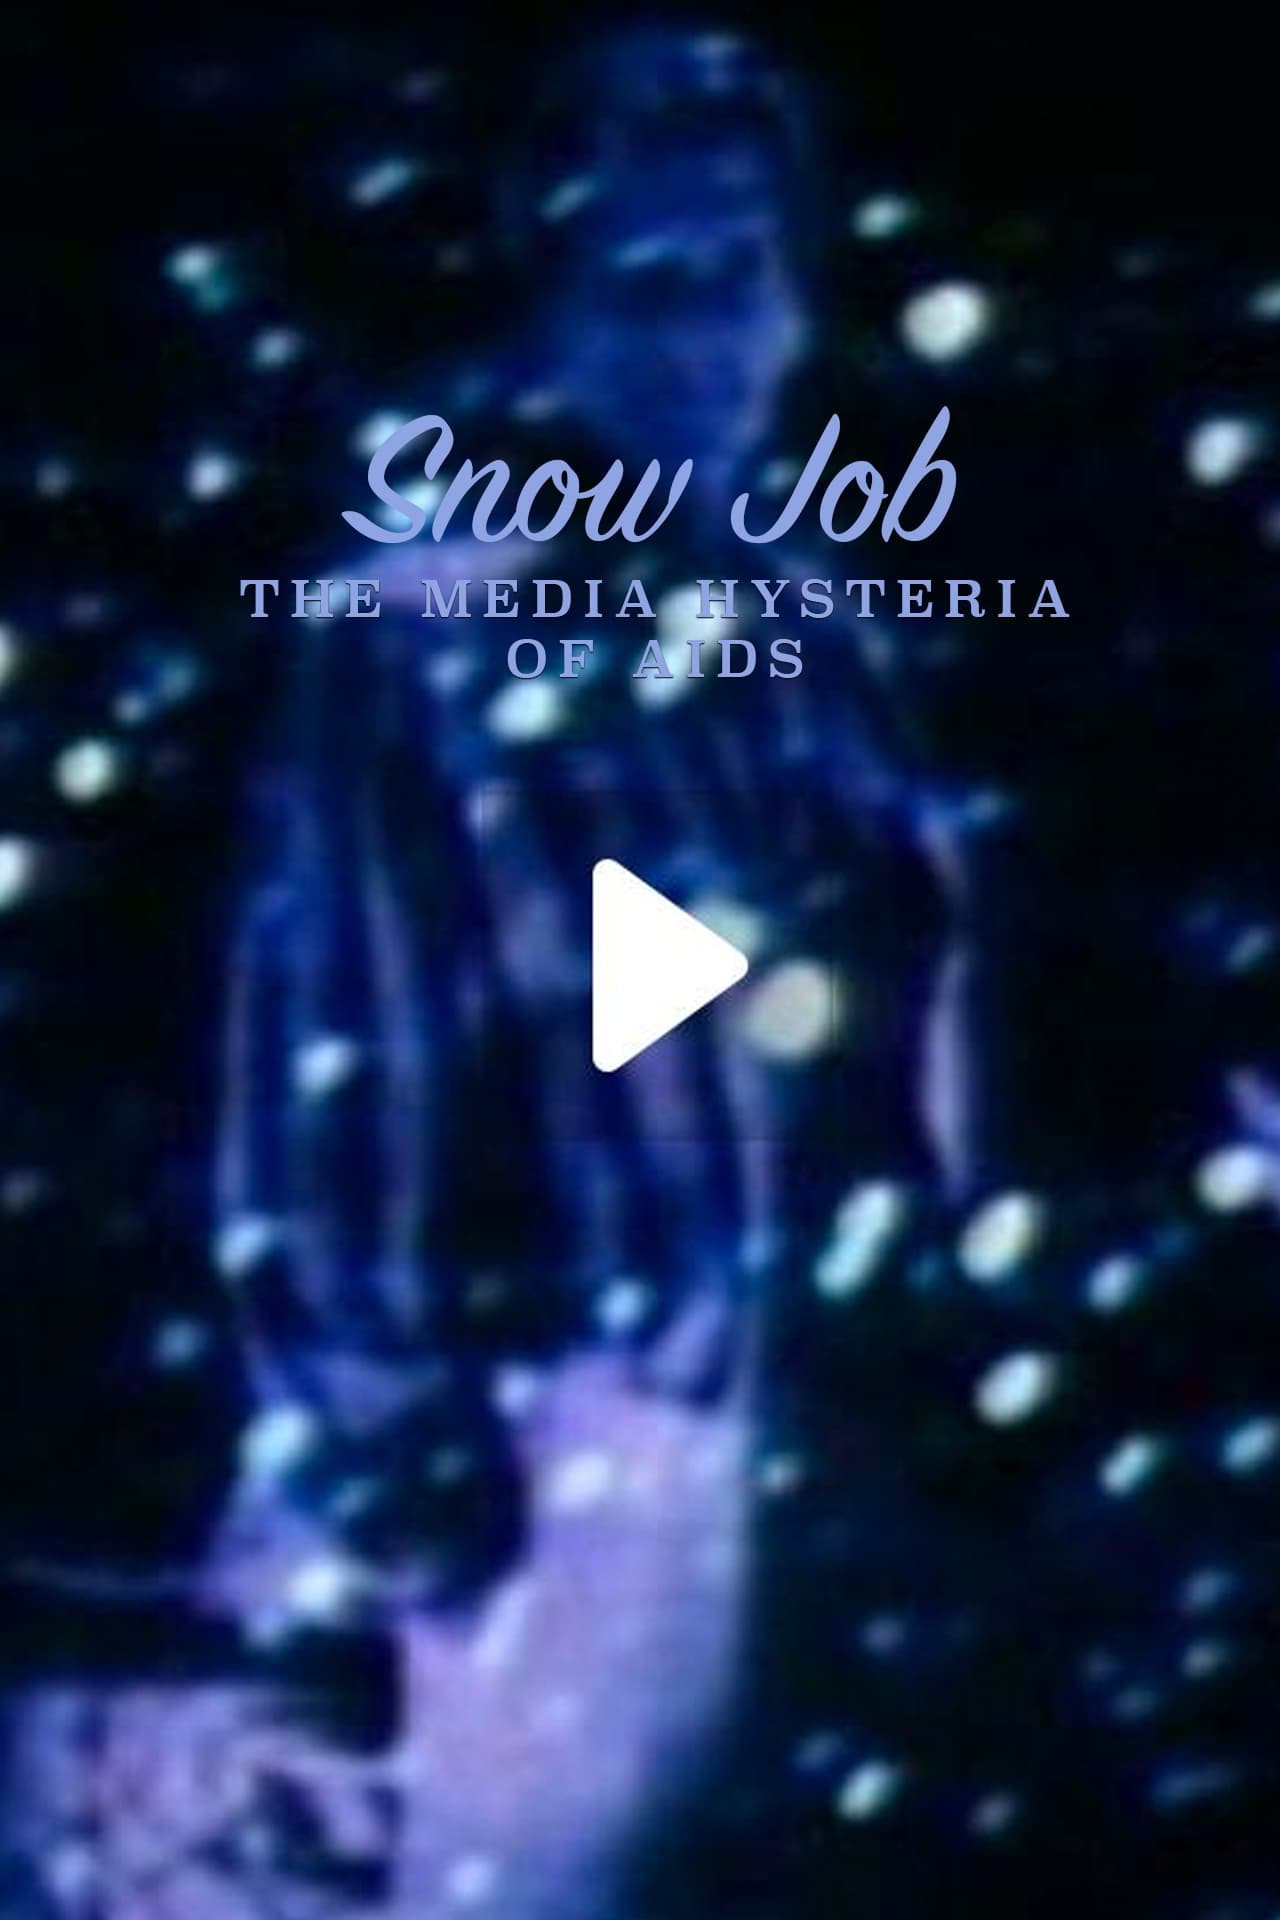 Snow Job: The Media Hysteria of AIDS